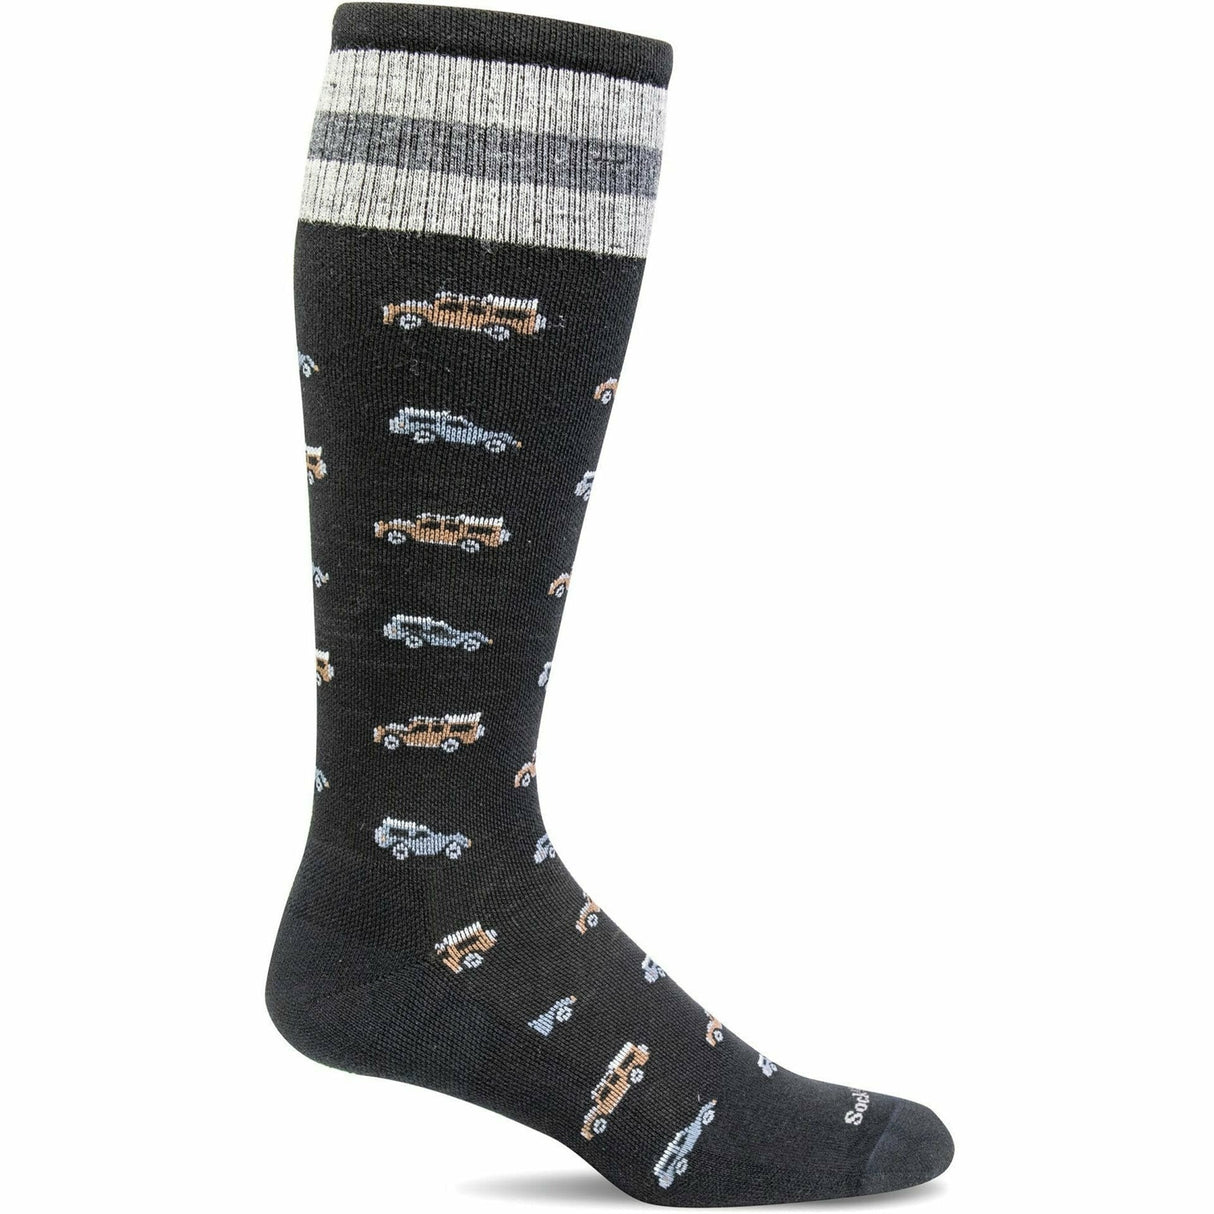 Sockwell Mens Road Trip Moderate Compression OTC Socks  -  Medium/Large / Black